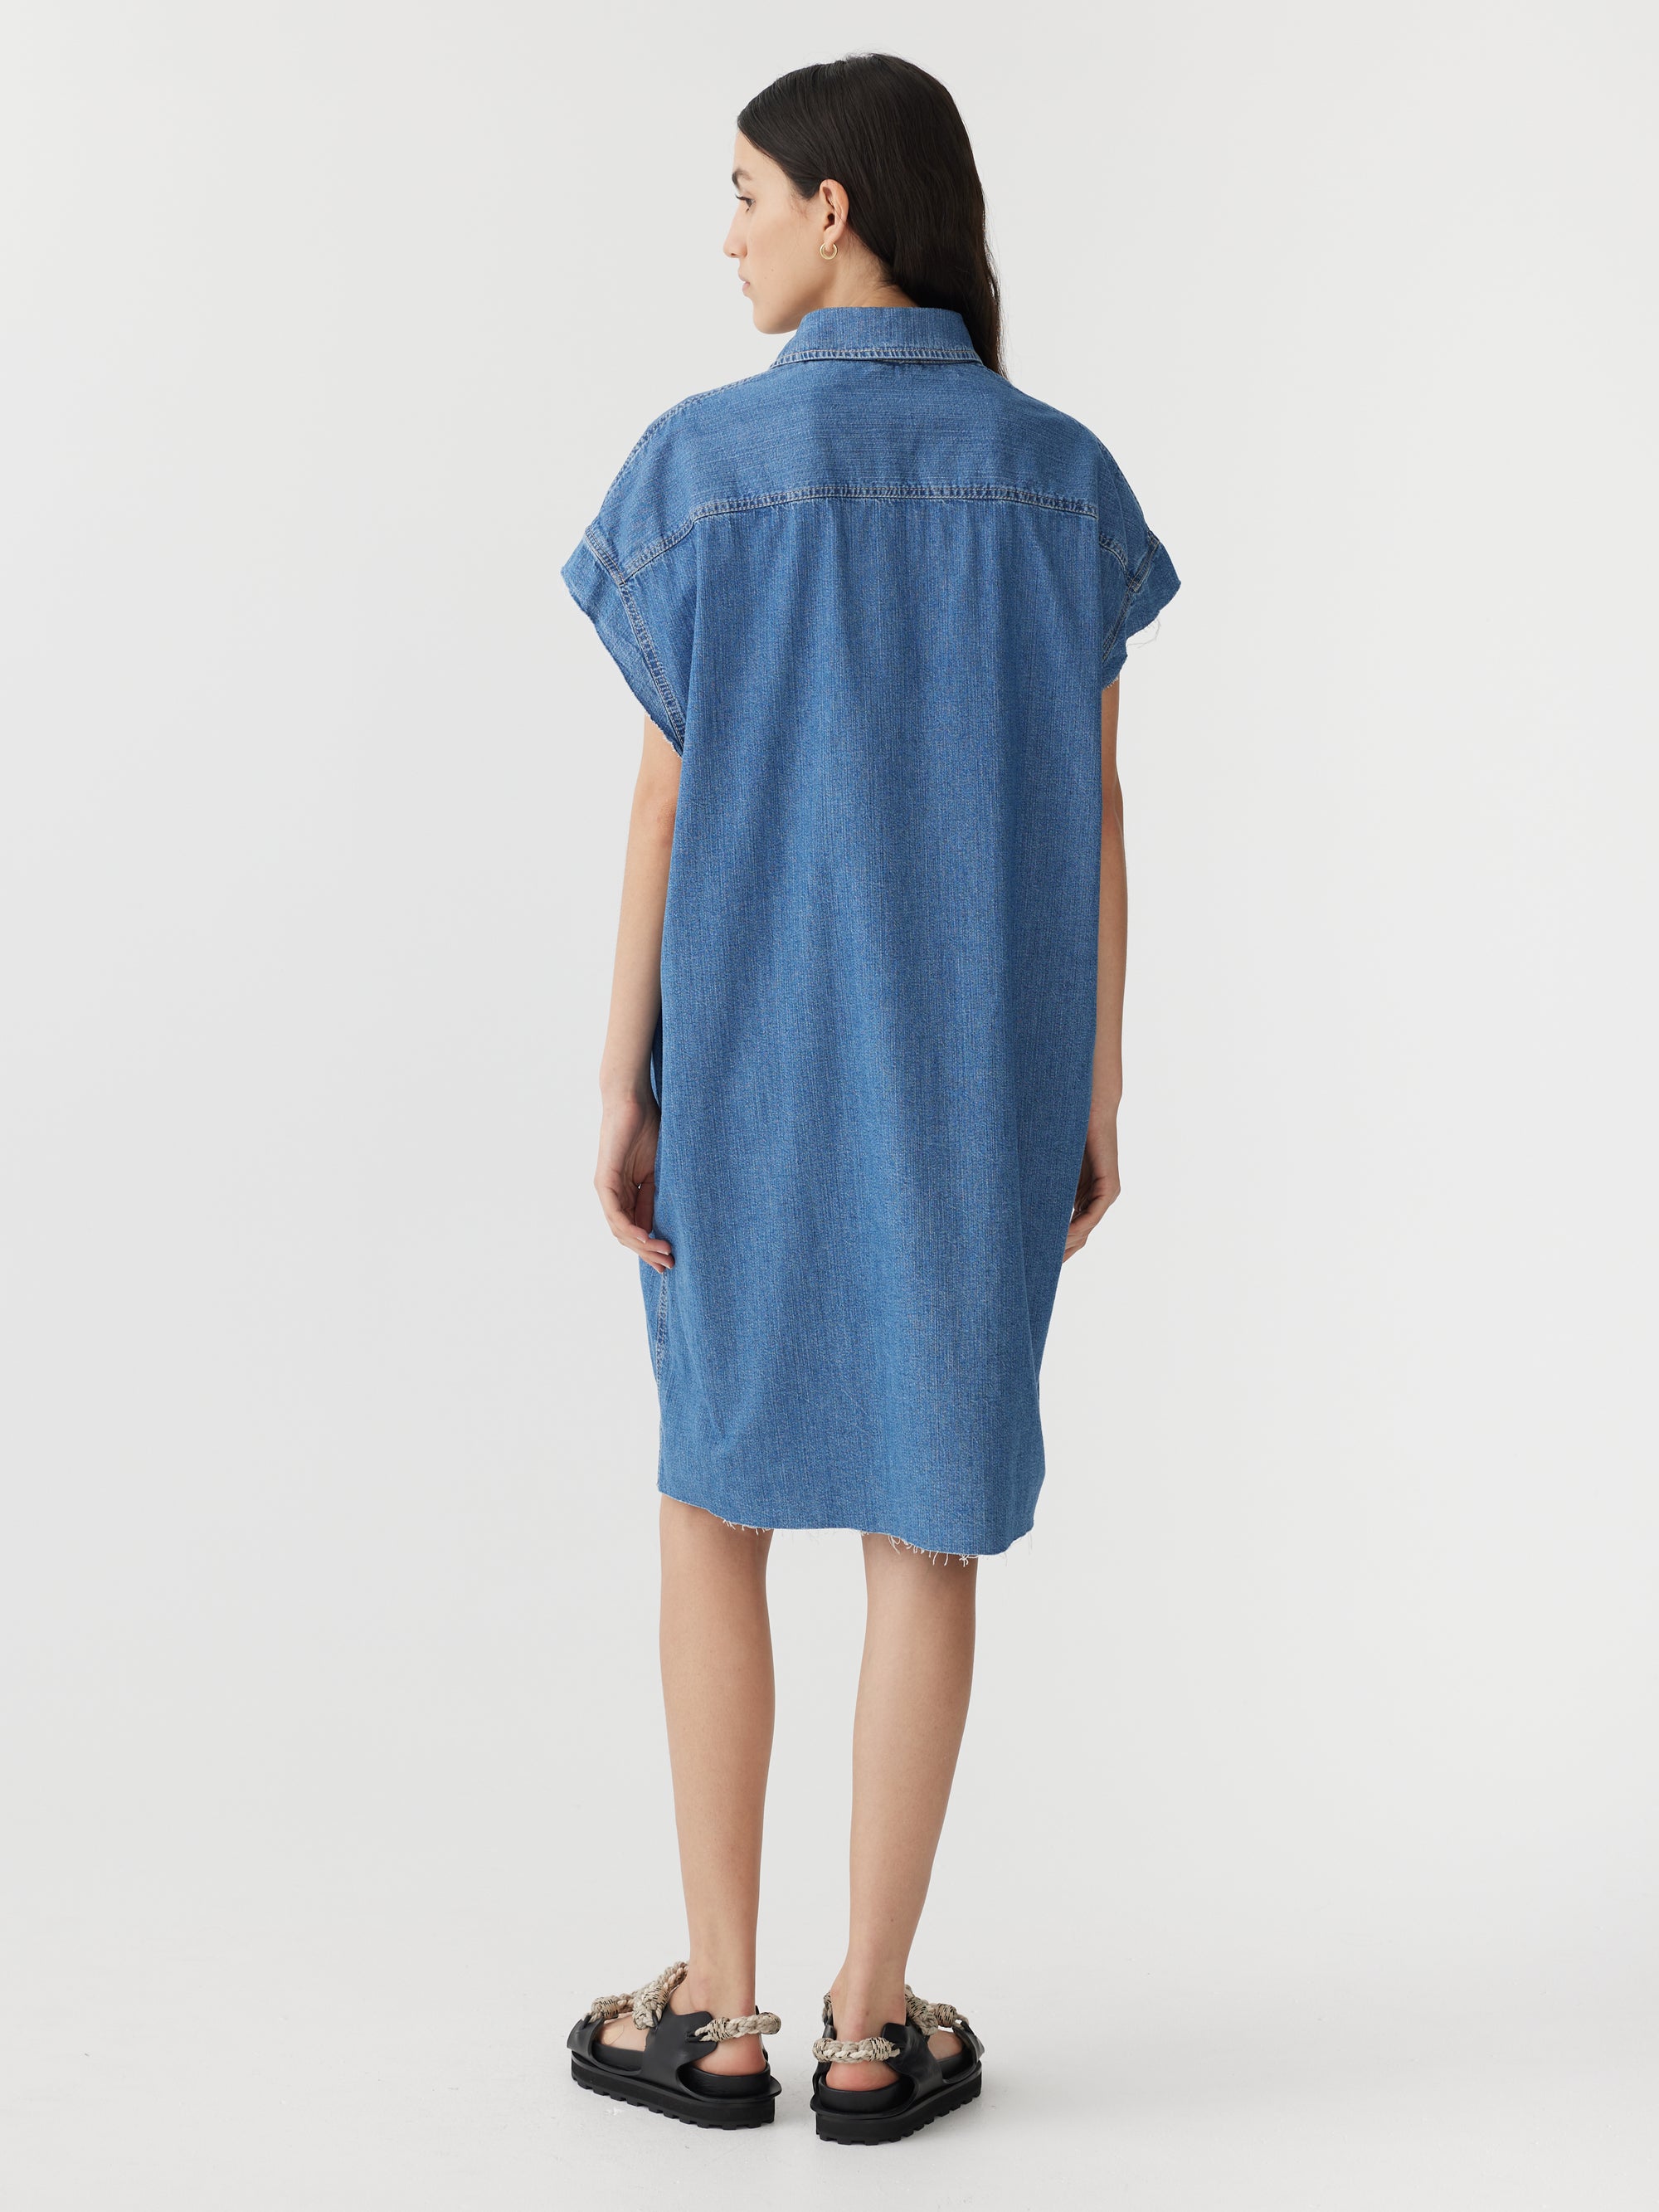 Plain Blue Ladies Sleeveless Denim Shirt, Size: Medium at Rs 175/piece in  Delhi